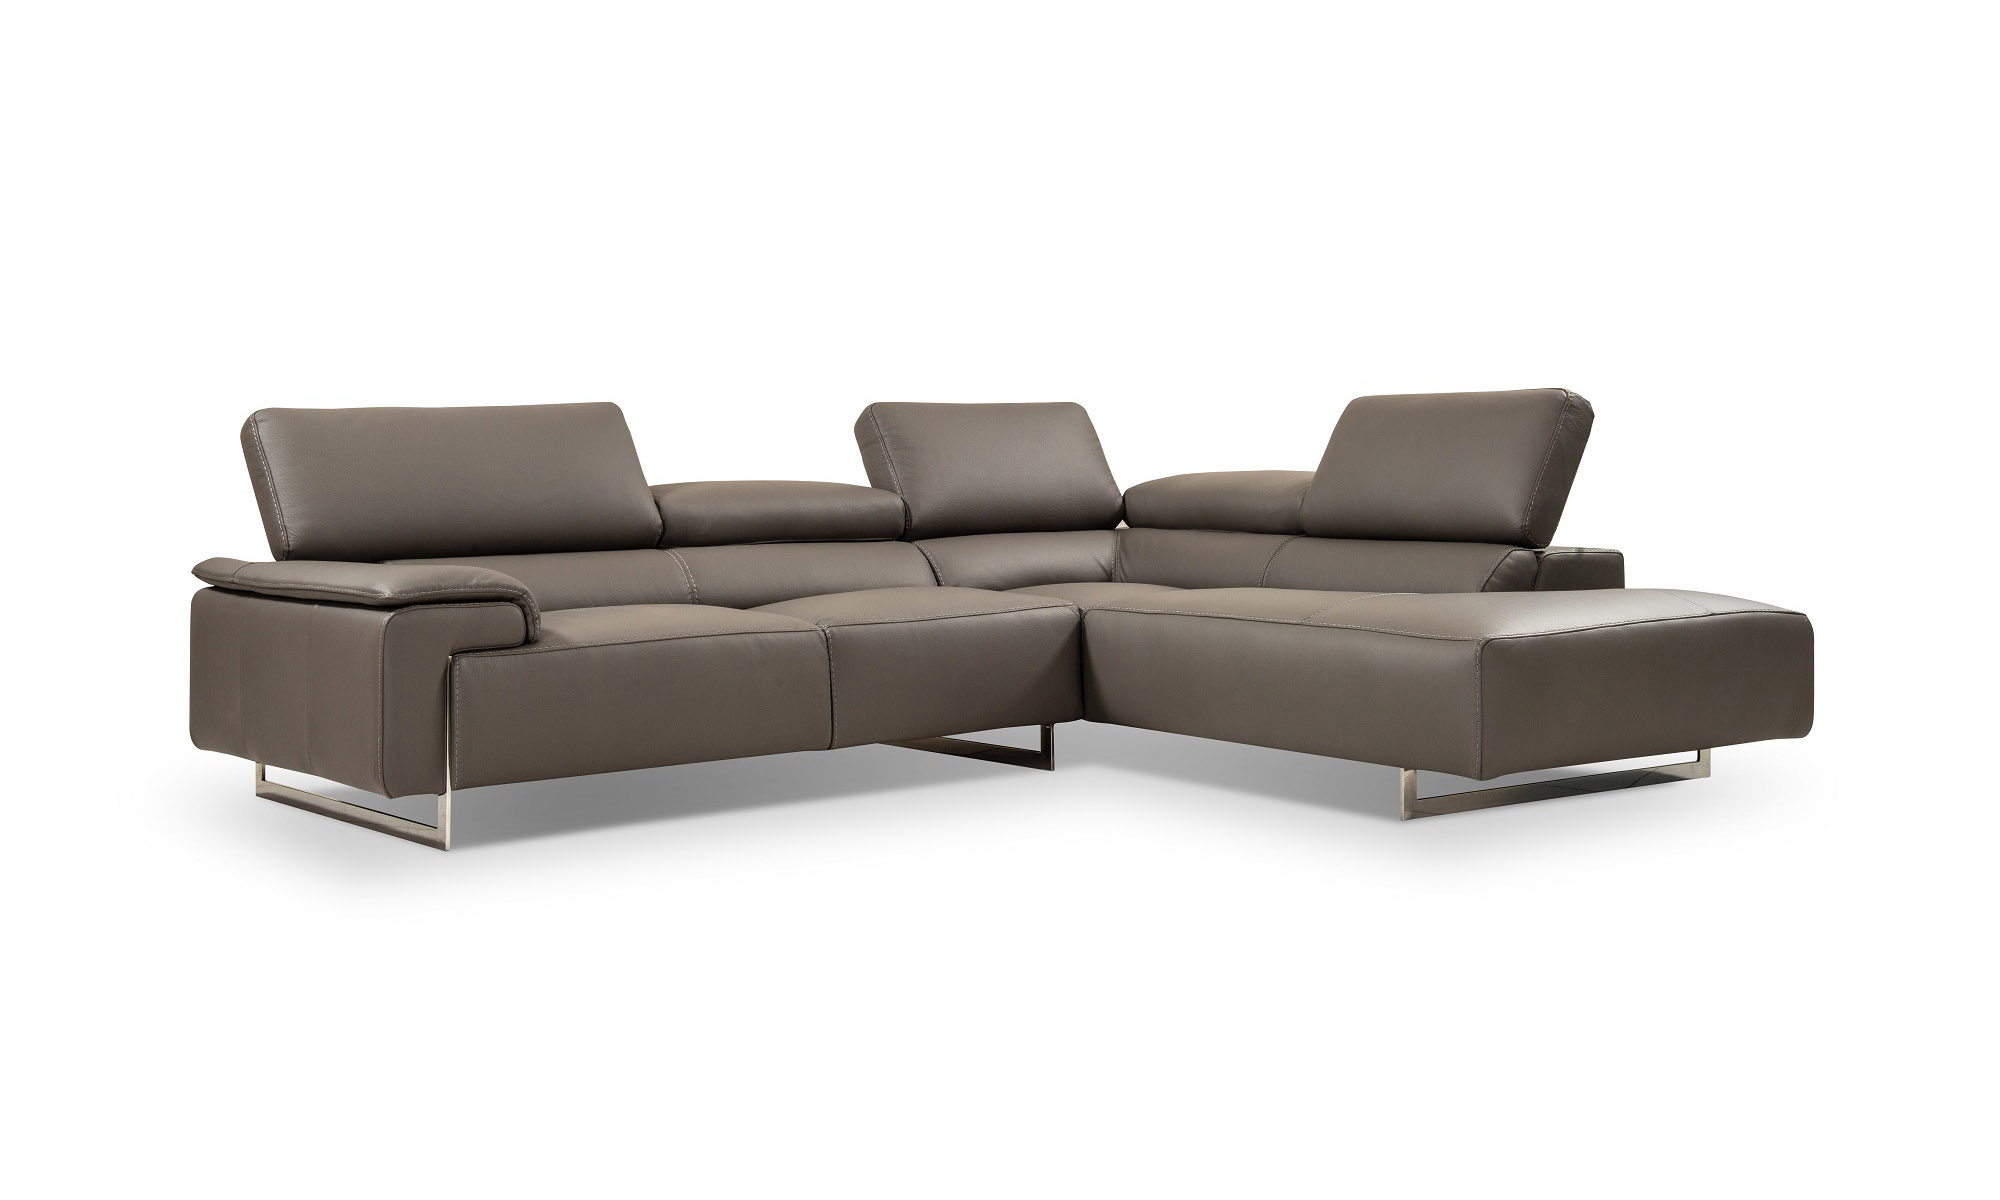 Italian Made Luxury Corner Sofa Soft Top Grain Leather J I794 